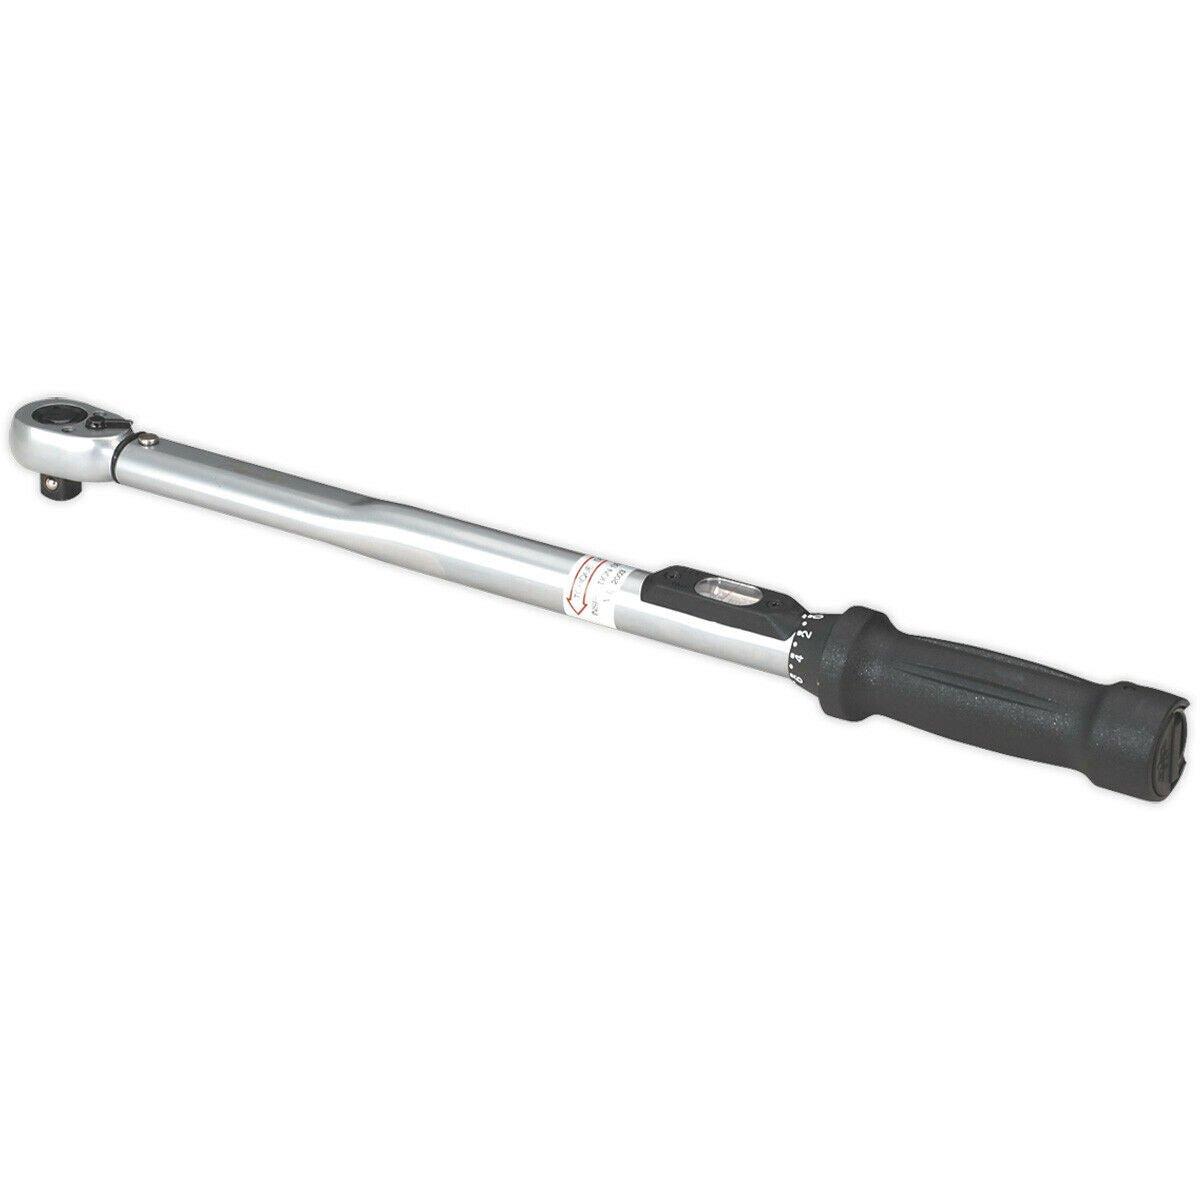 Locking Micrometer Torque Wrench - 1/2